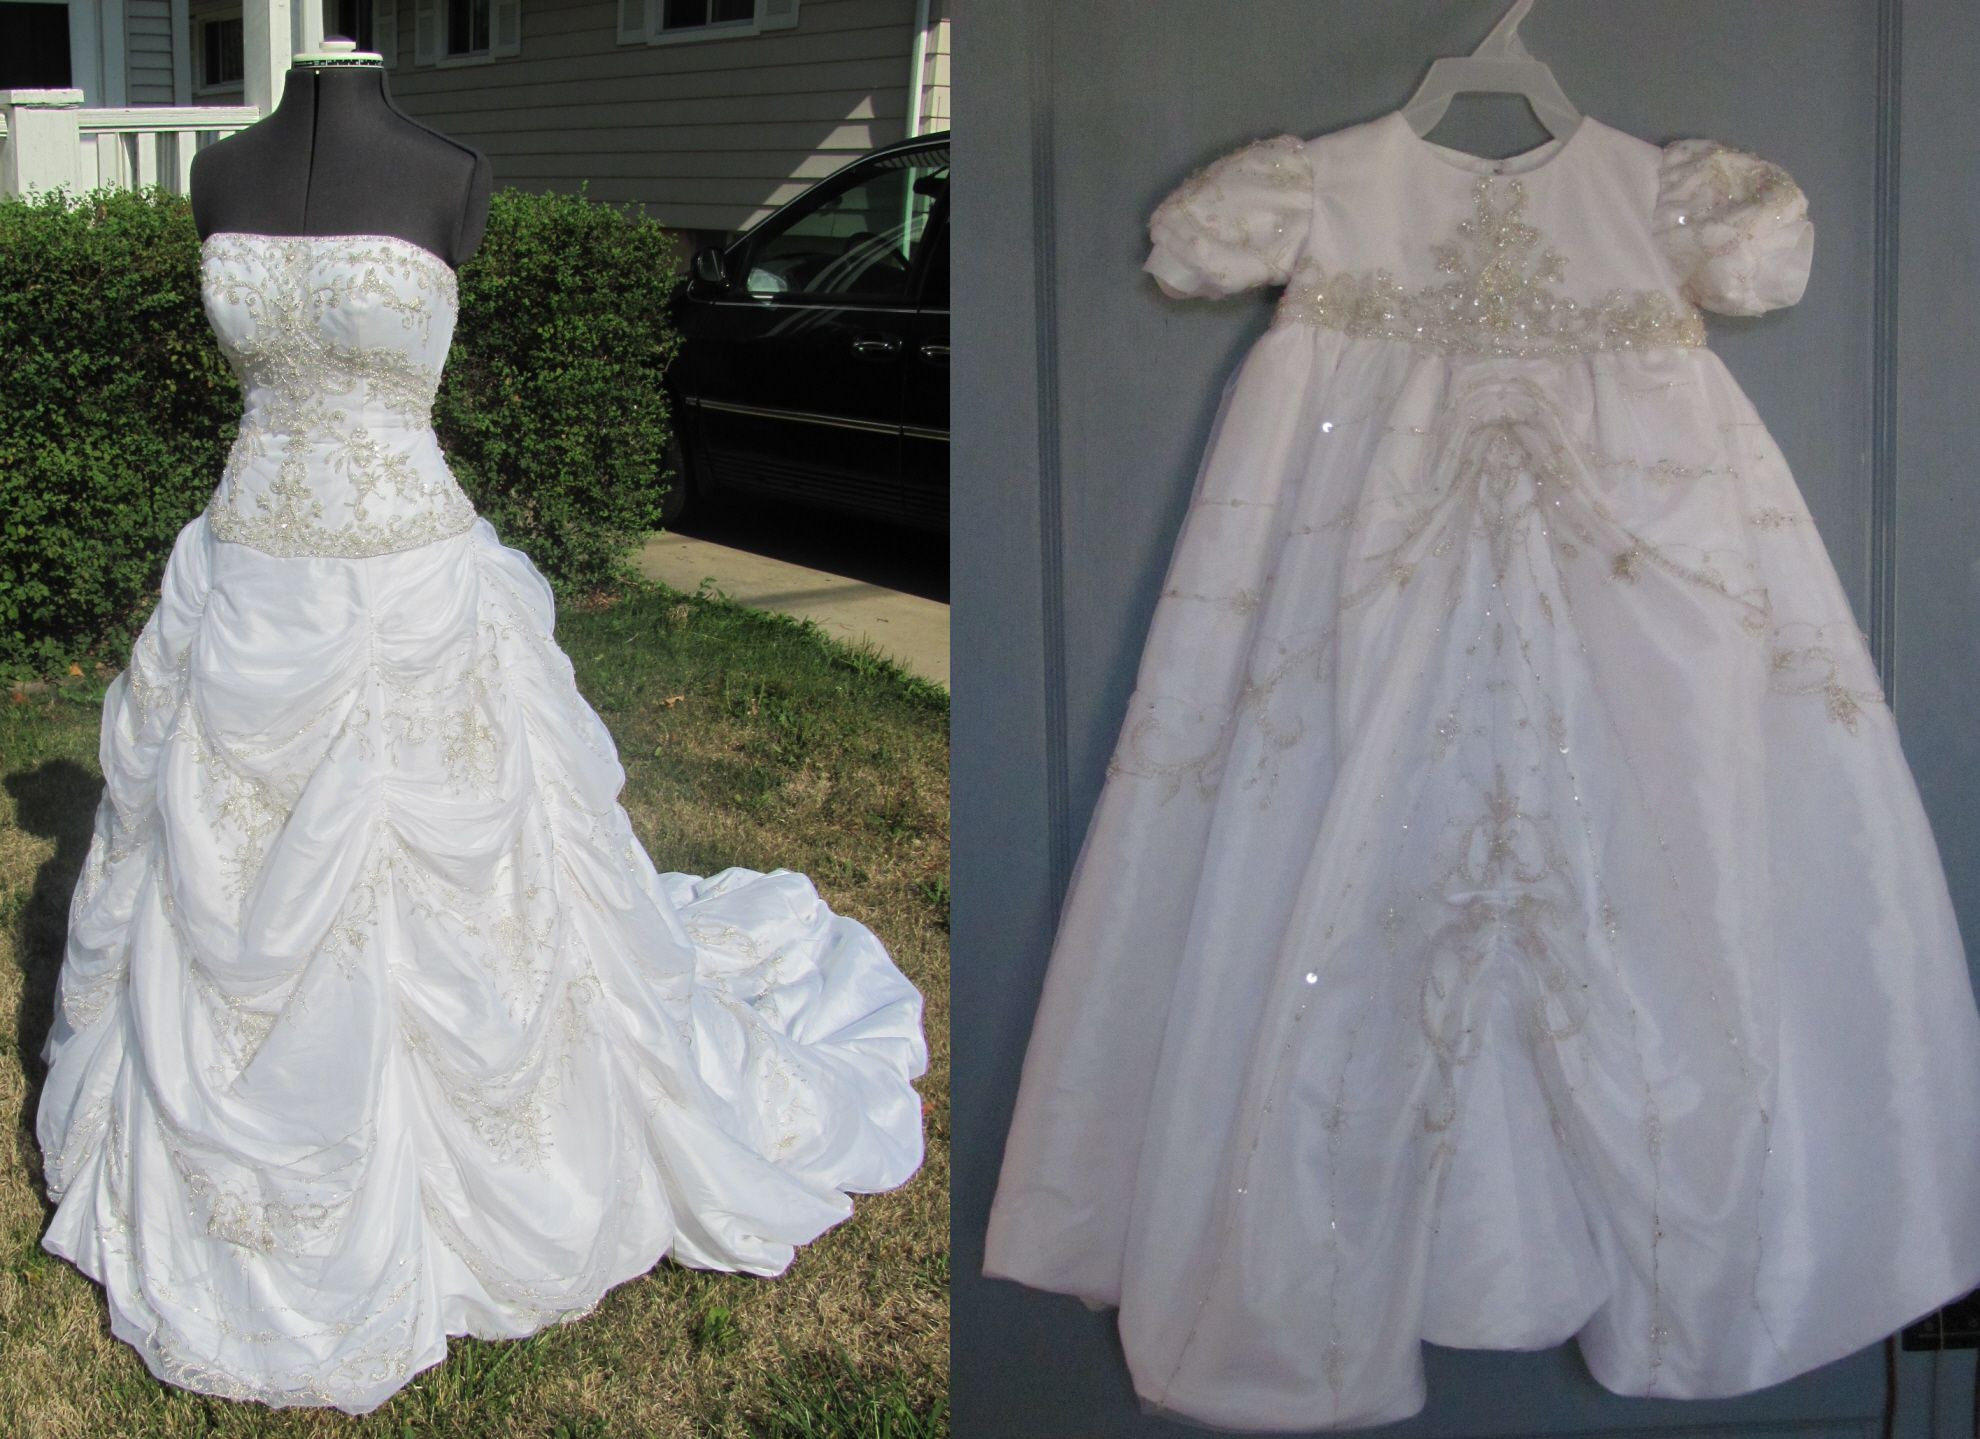 Christening Gown From Wedding Dress
 I convert your wedding dress into a christening gown